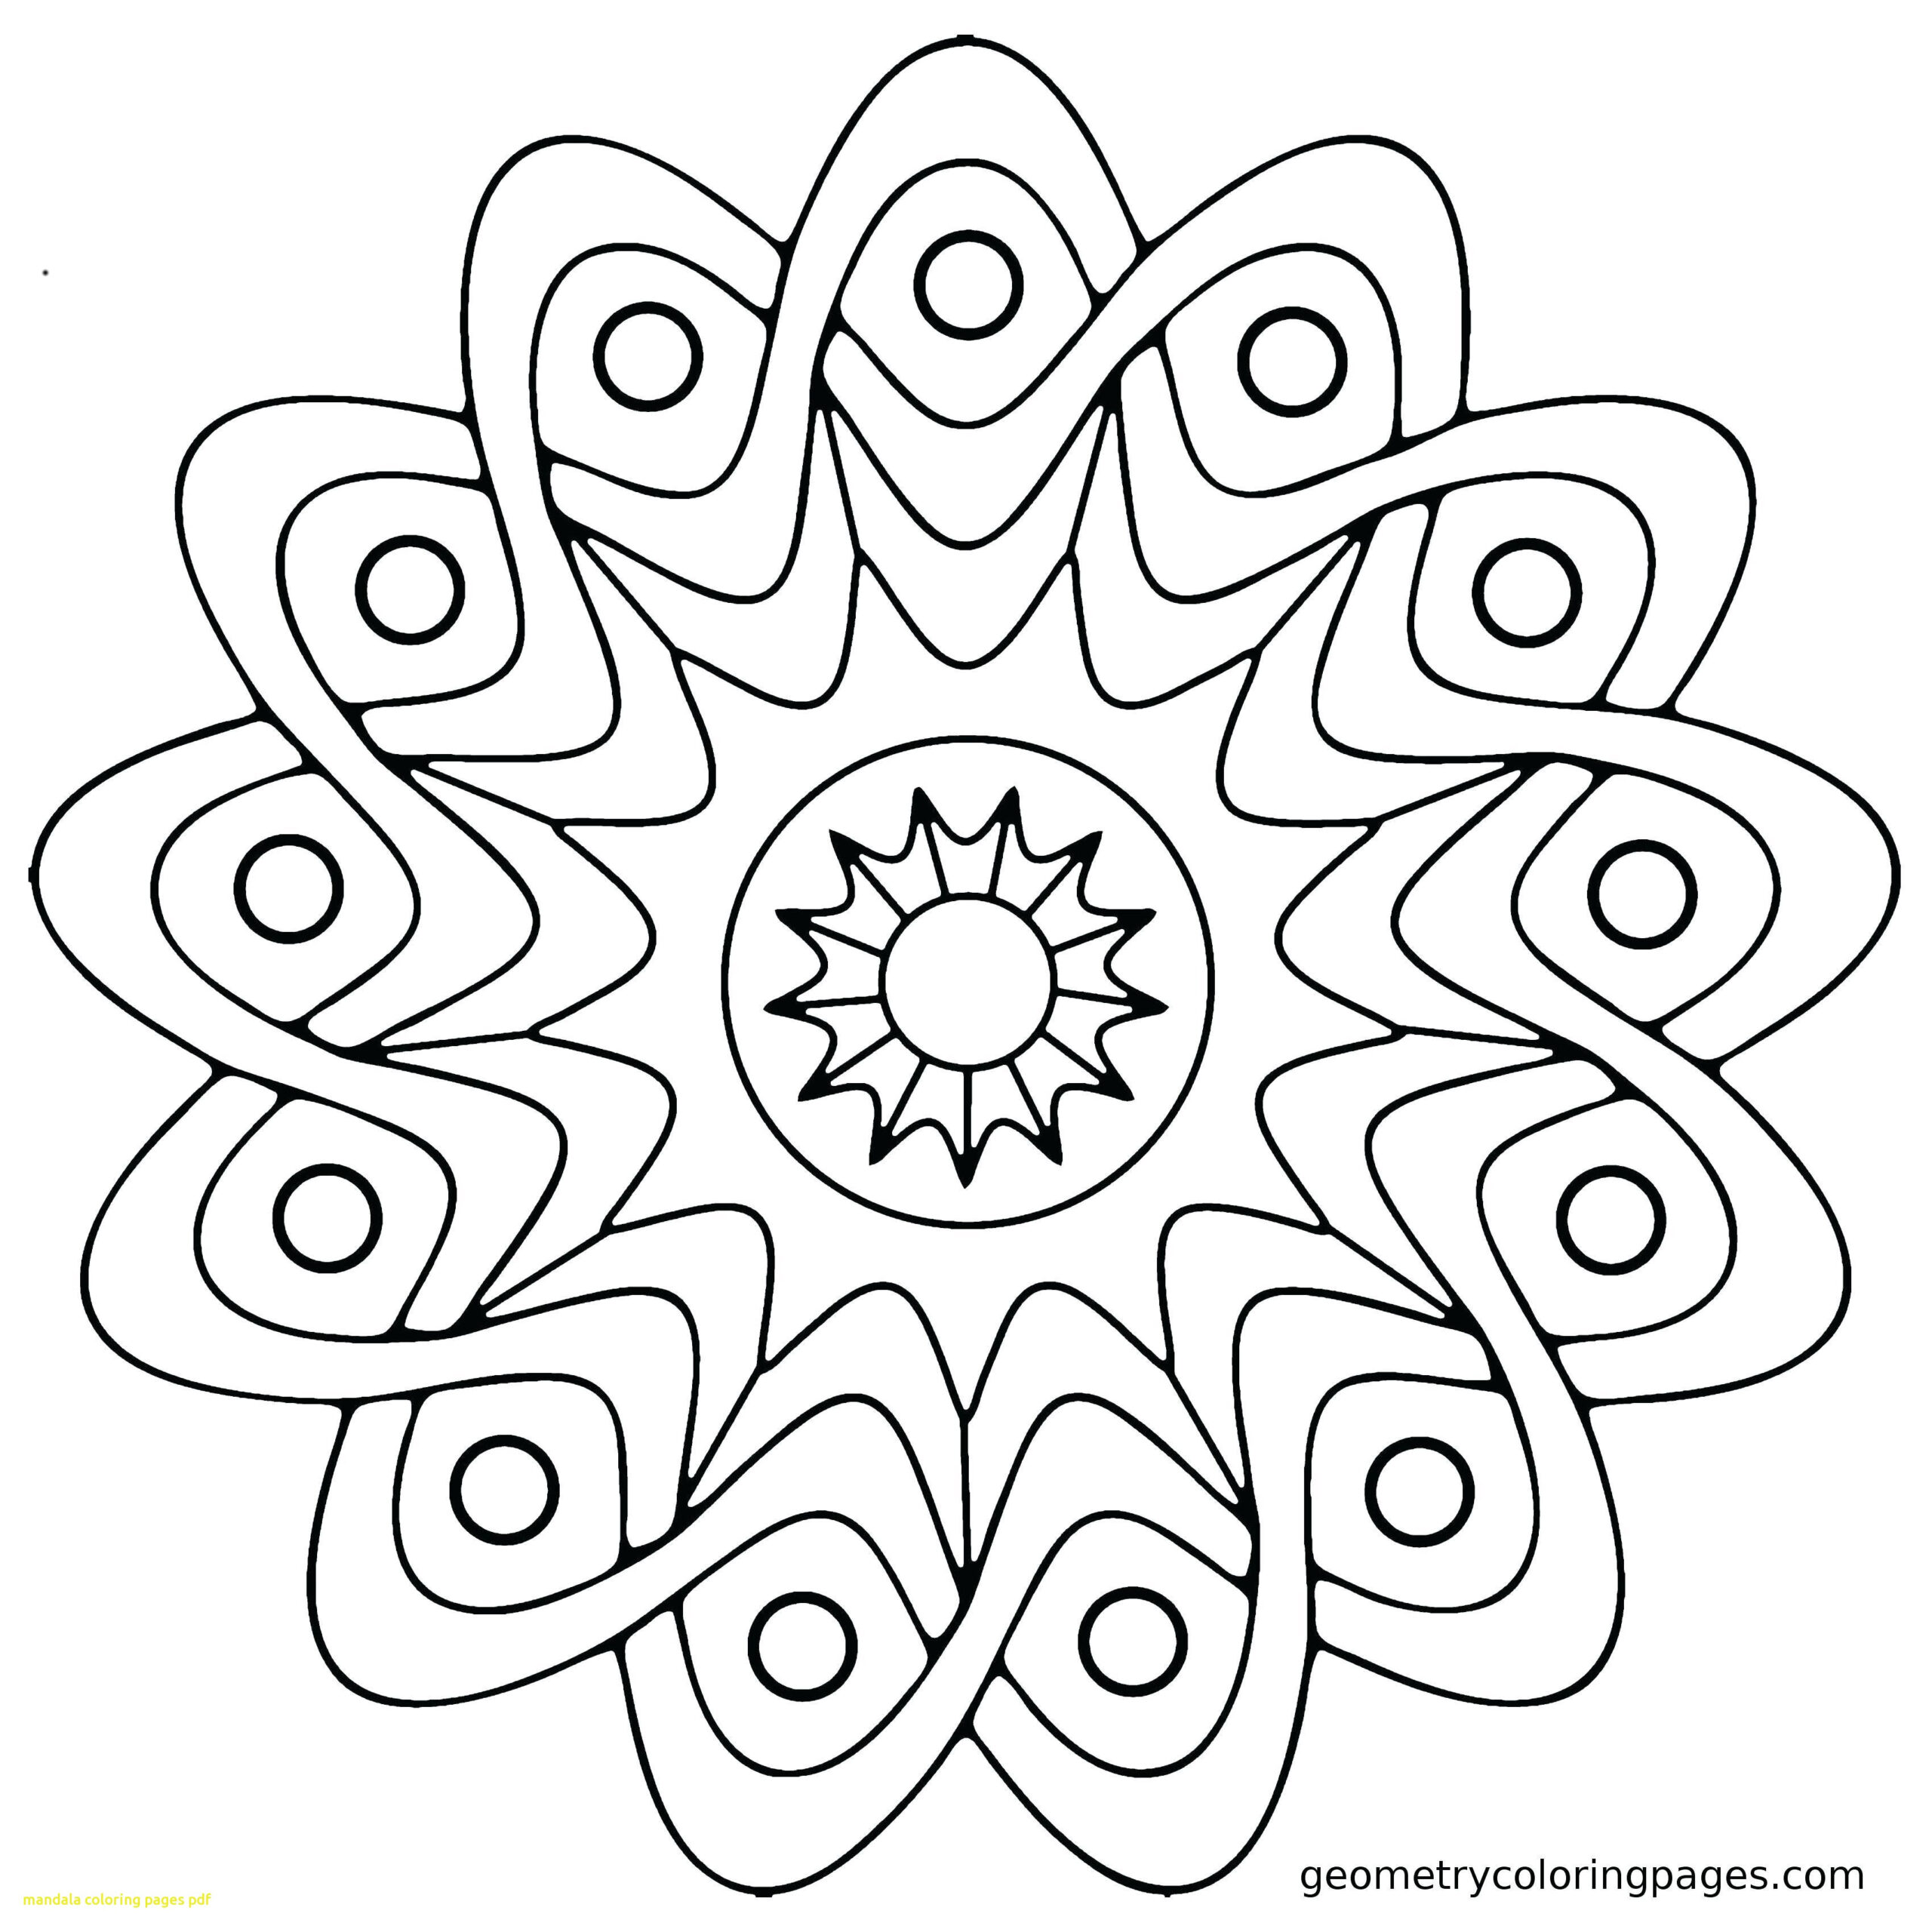 Mandala Coloring Pages Pdf At GetColorings Free Printable 